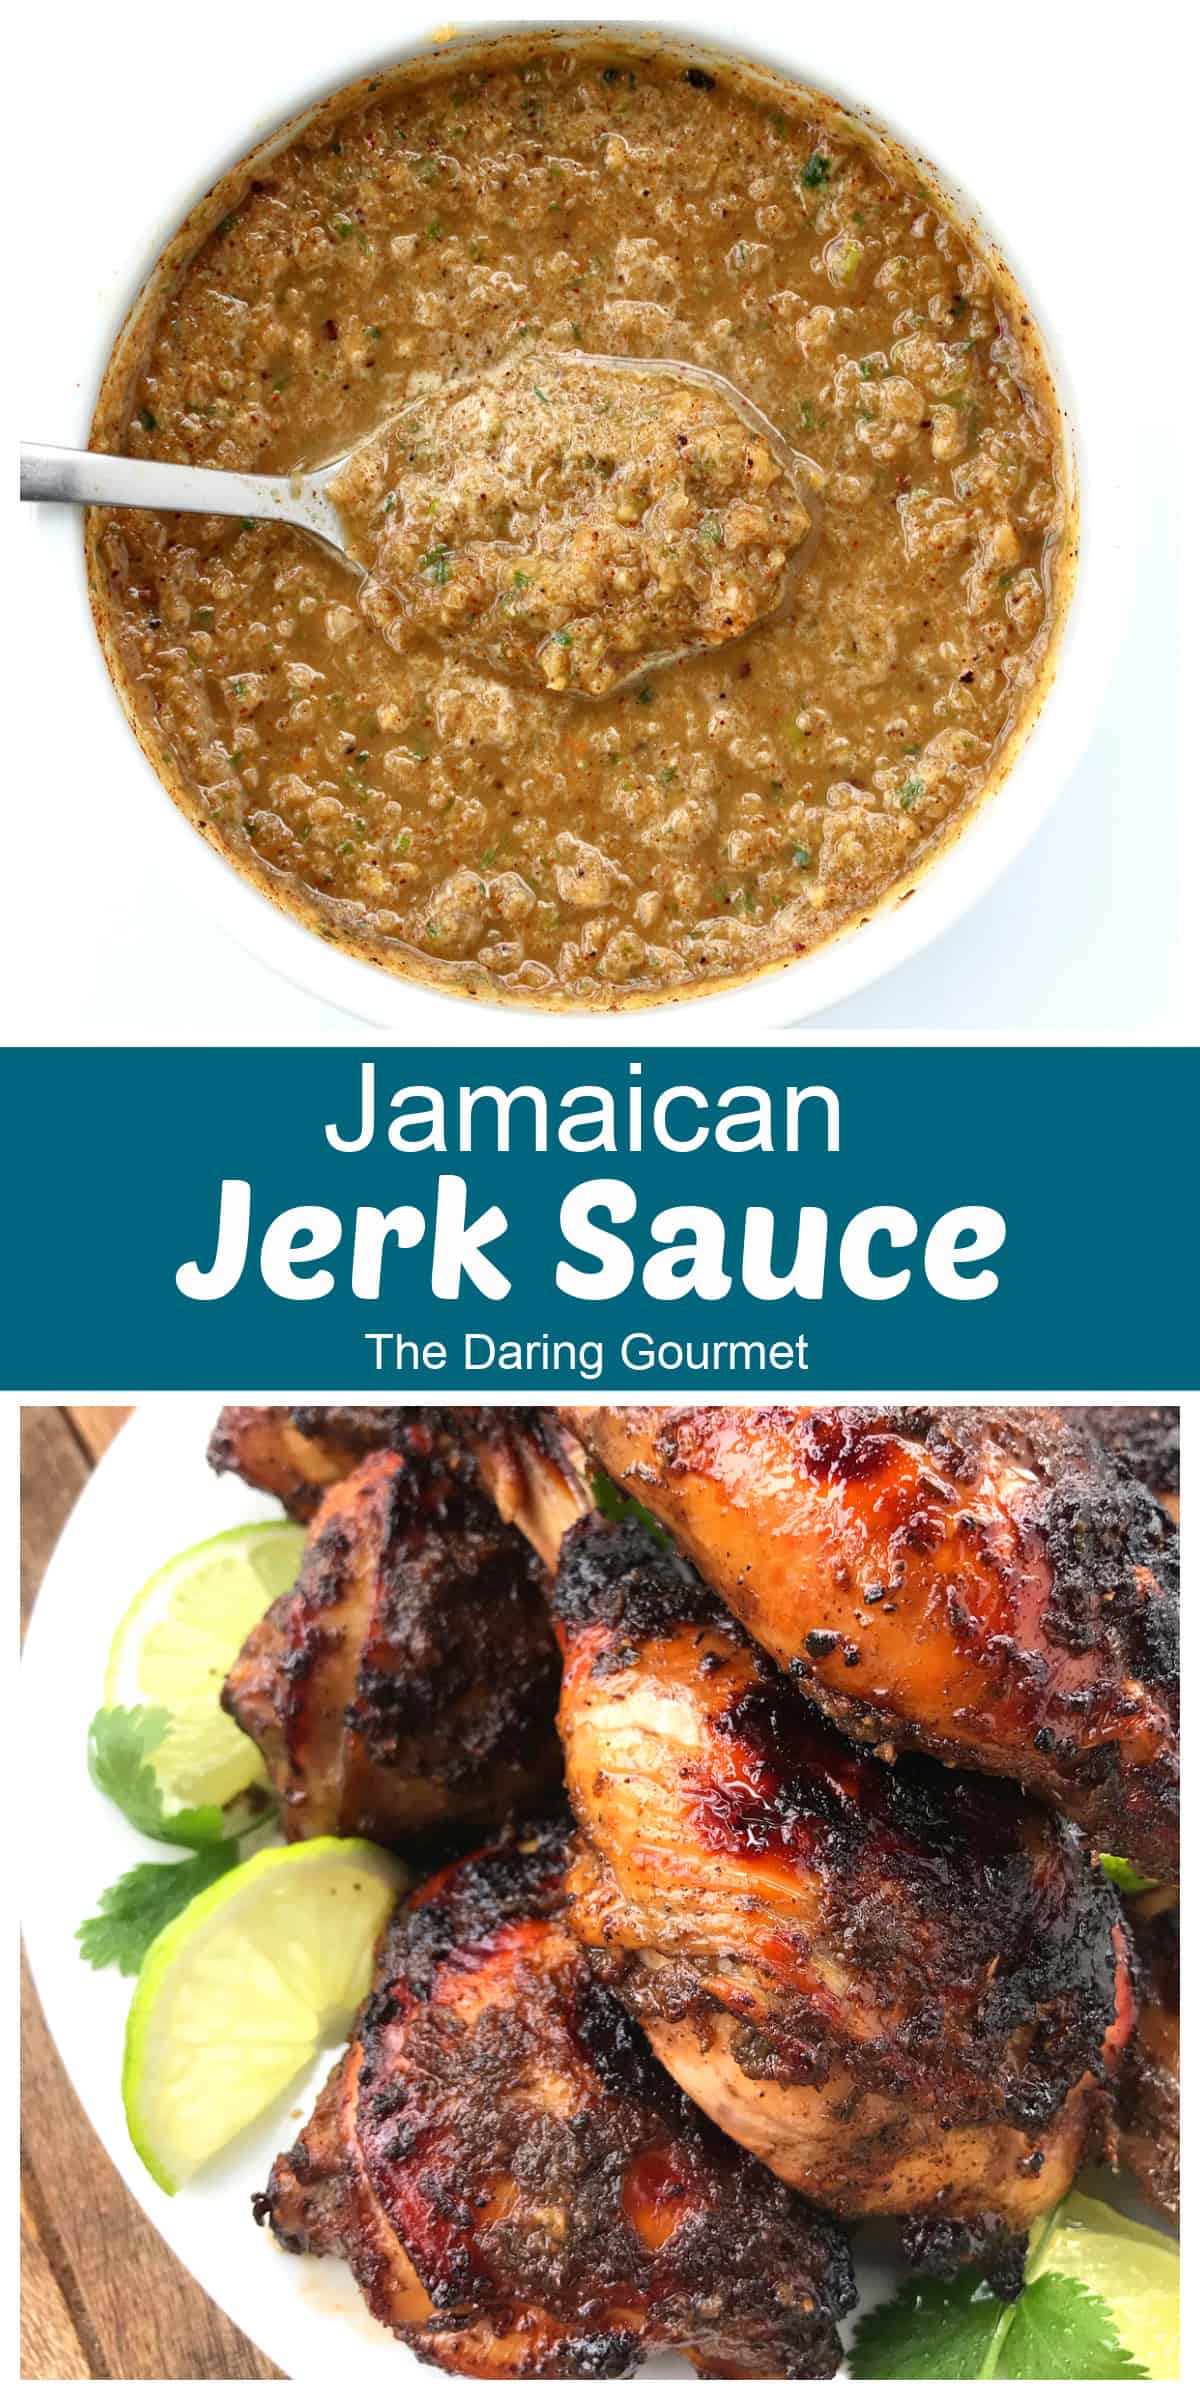 jerk sauce recipe jamaican best traditional authentic